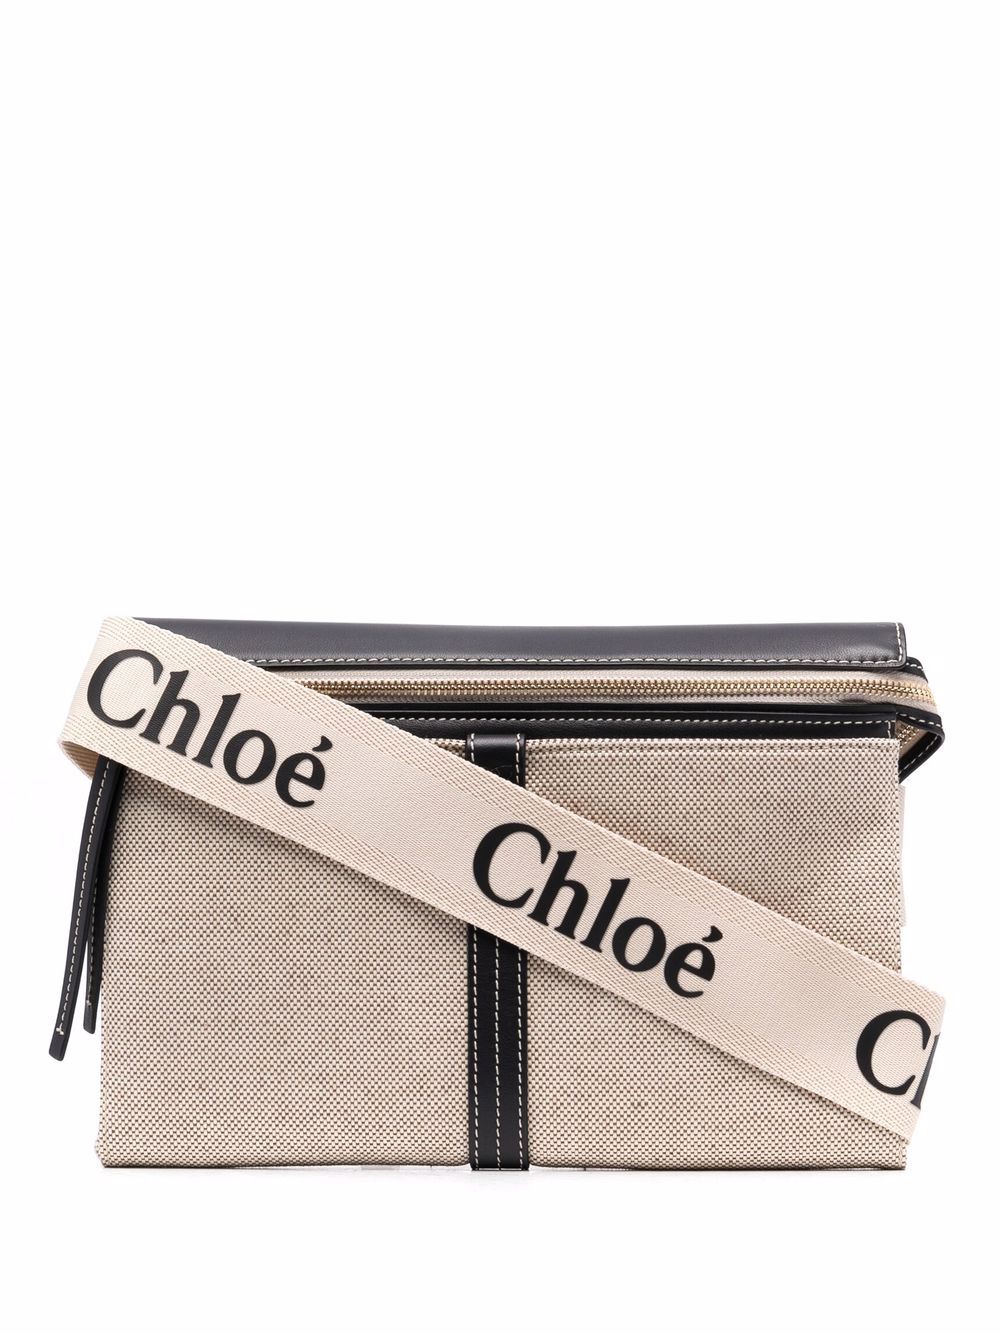 фото Chloé сумка через плечо woody с логотипом